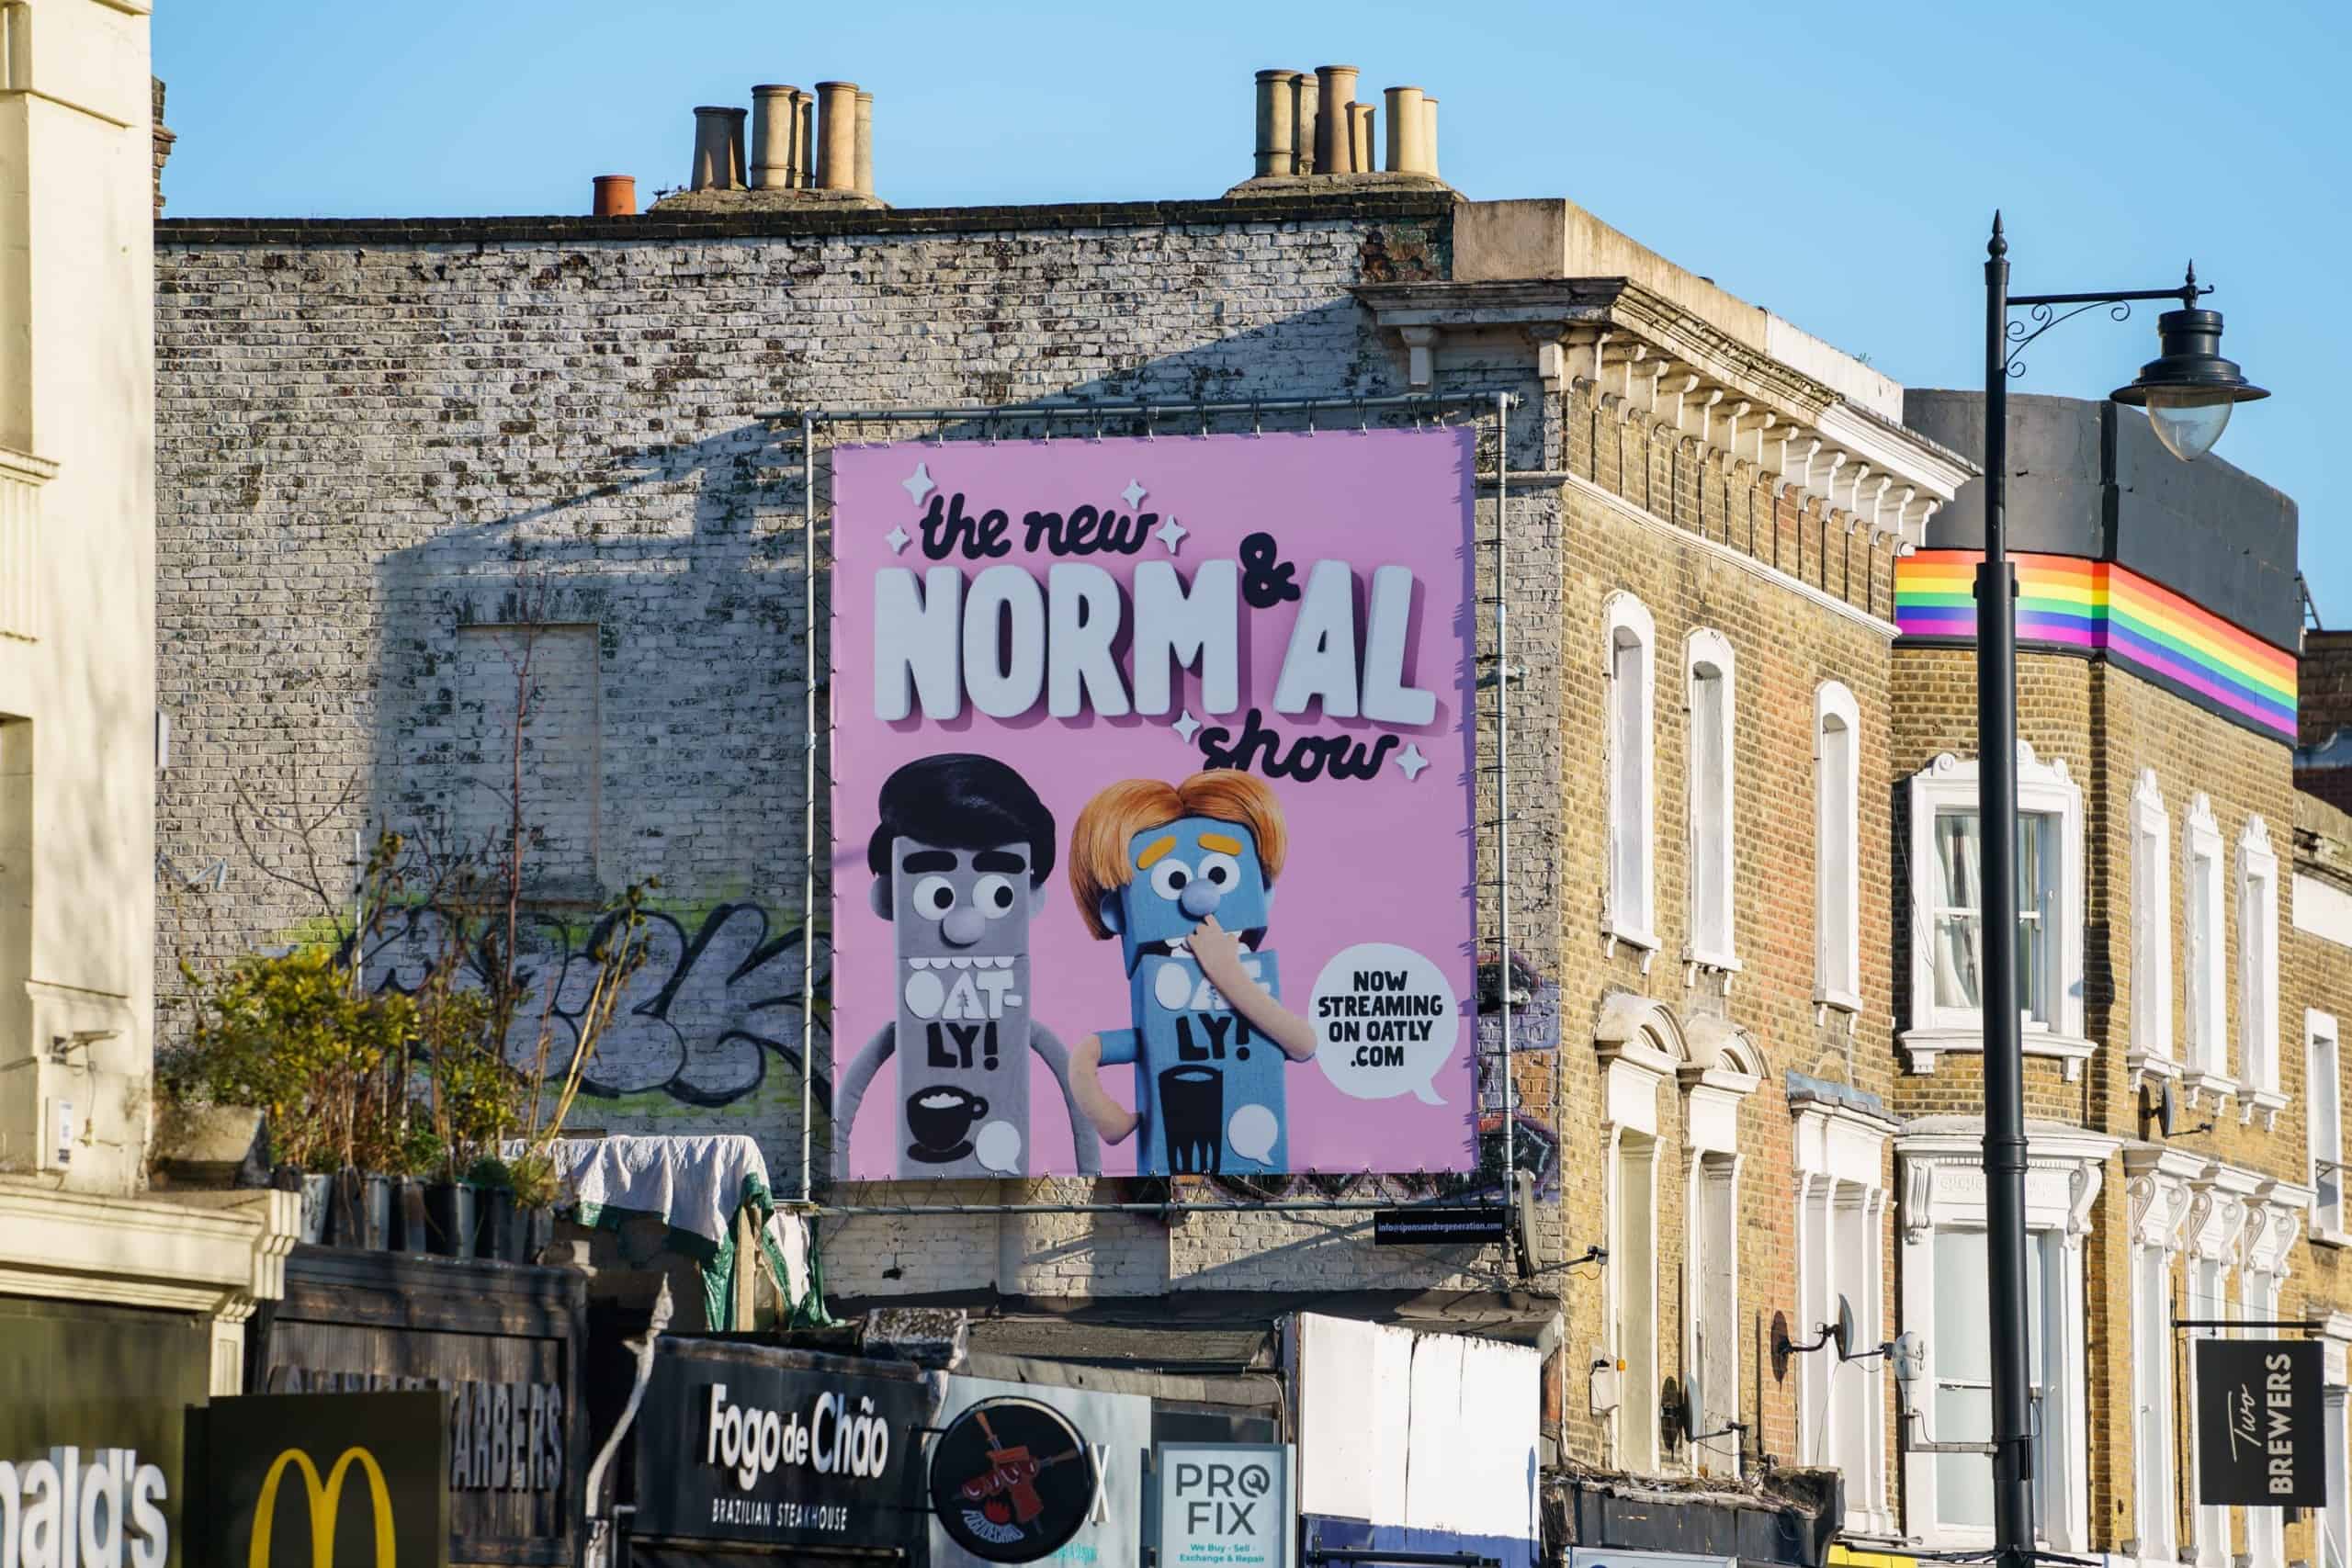 Norm&Al Show Oatly billboard